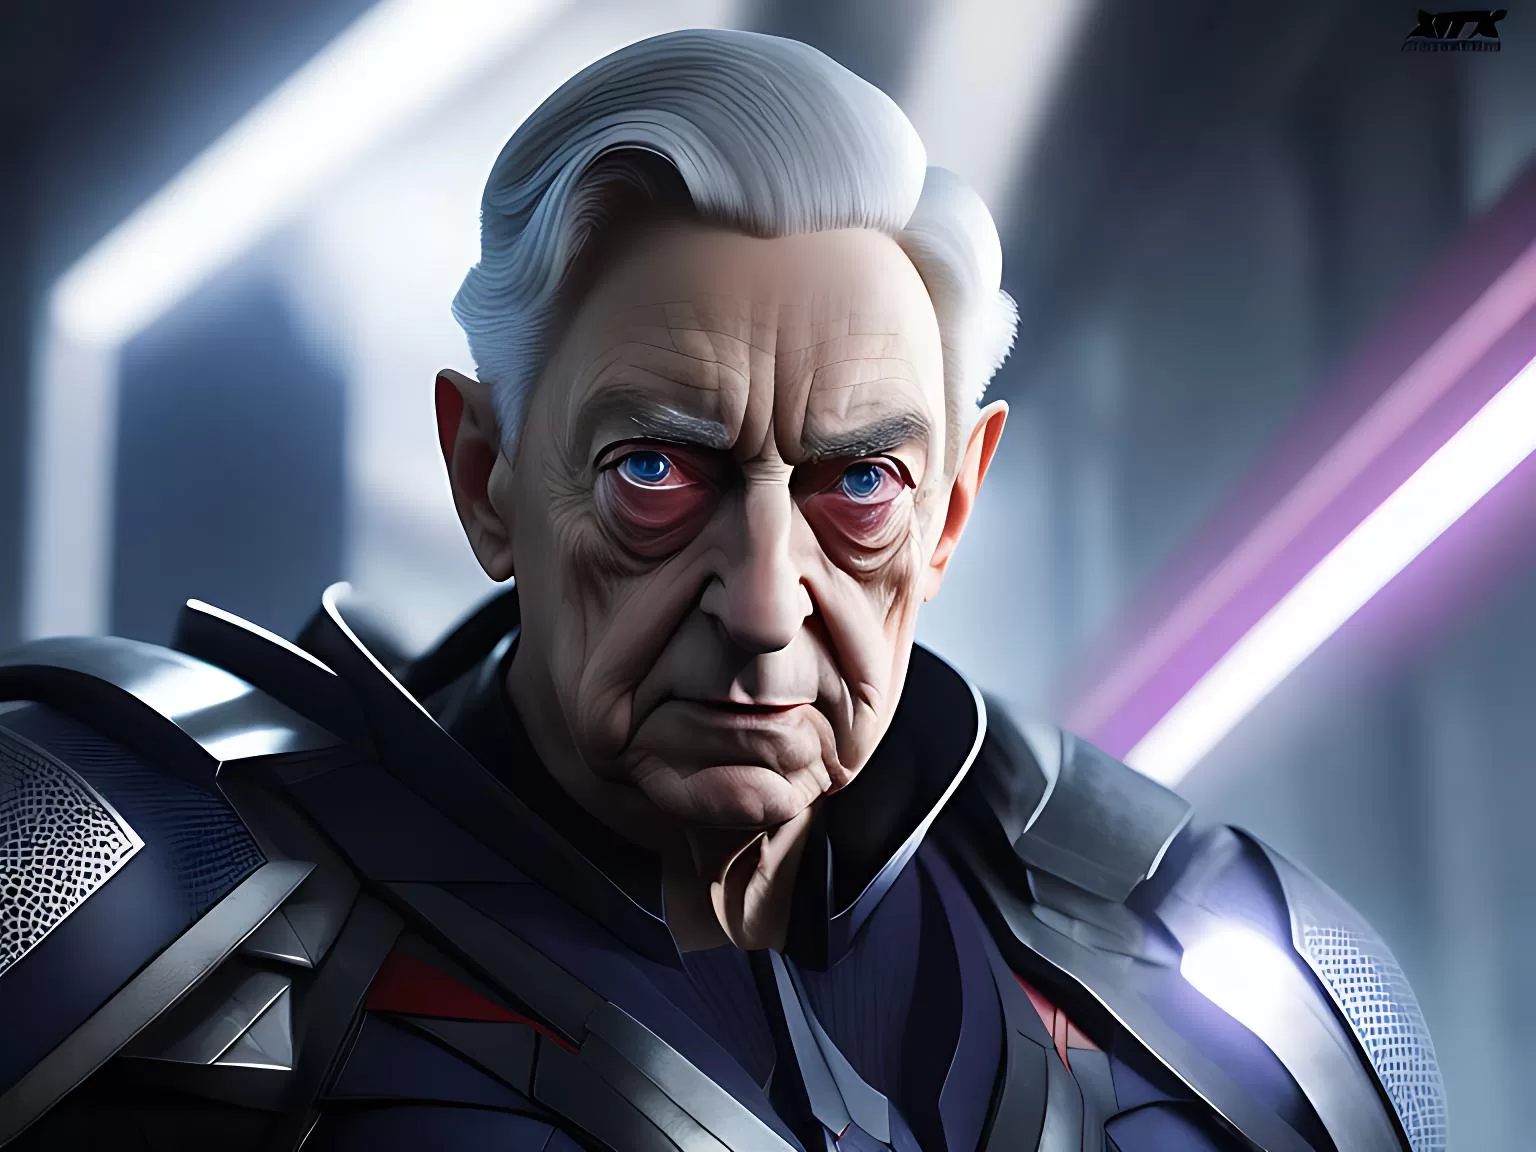 George Soros as Magneto